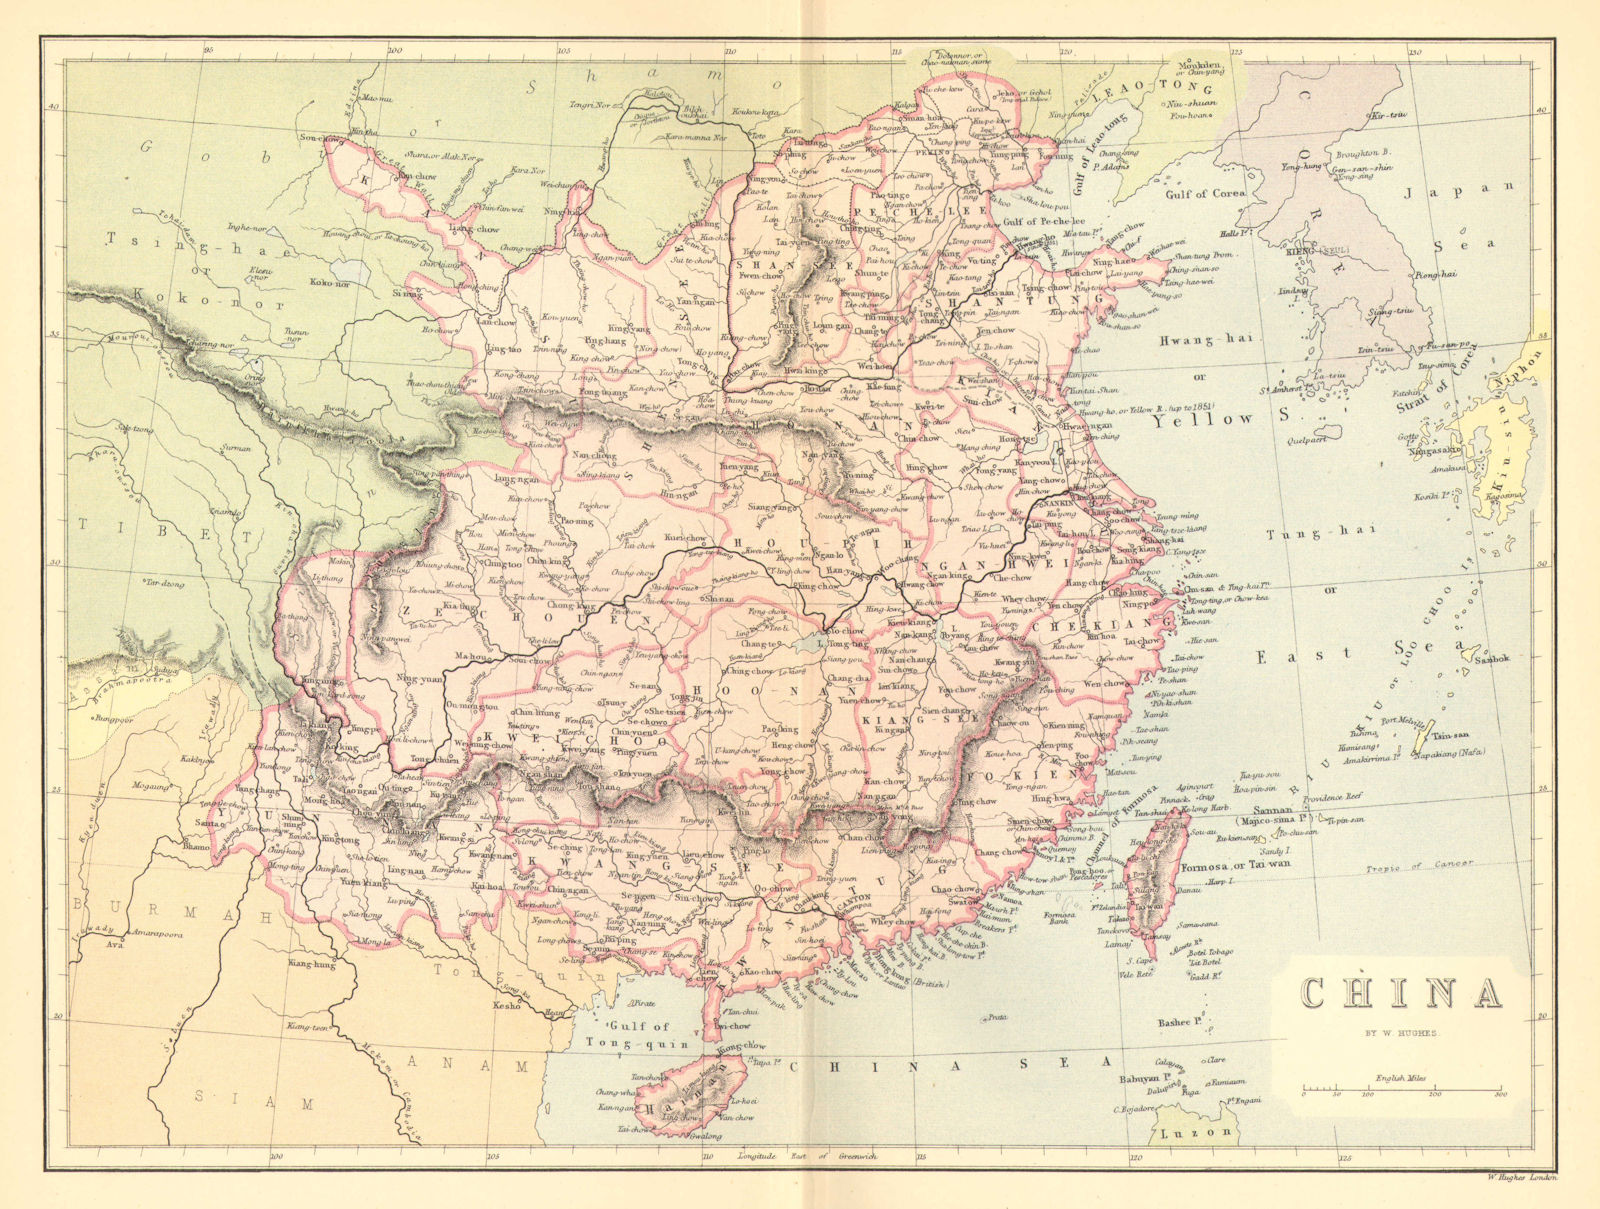 CHINA. China c1885 old antique vintage map plan chart